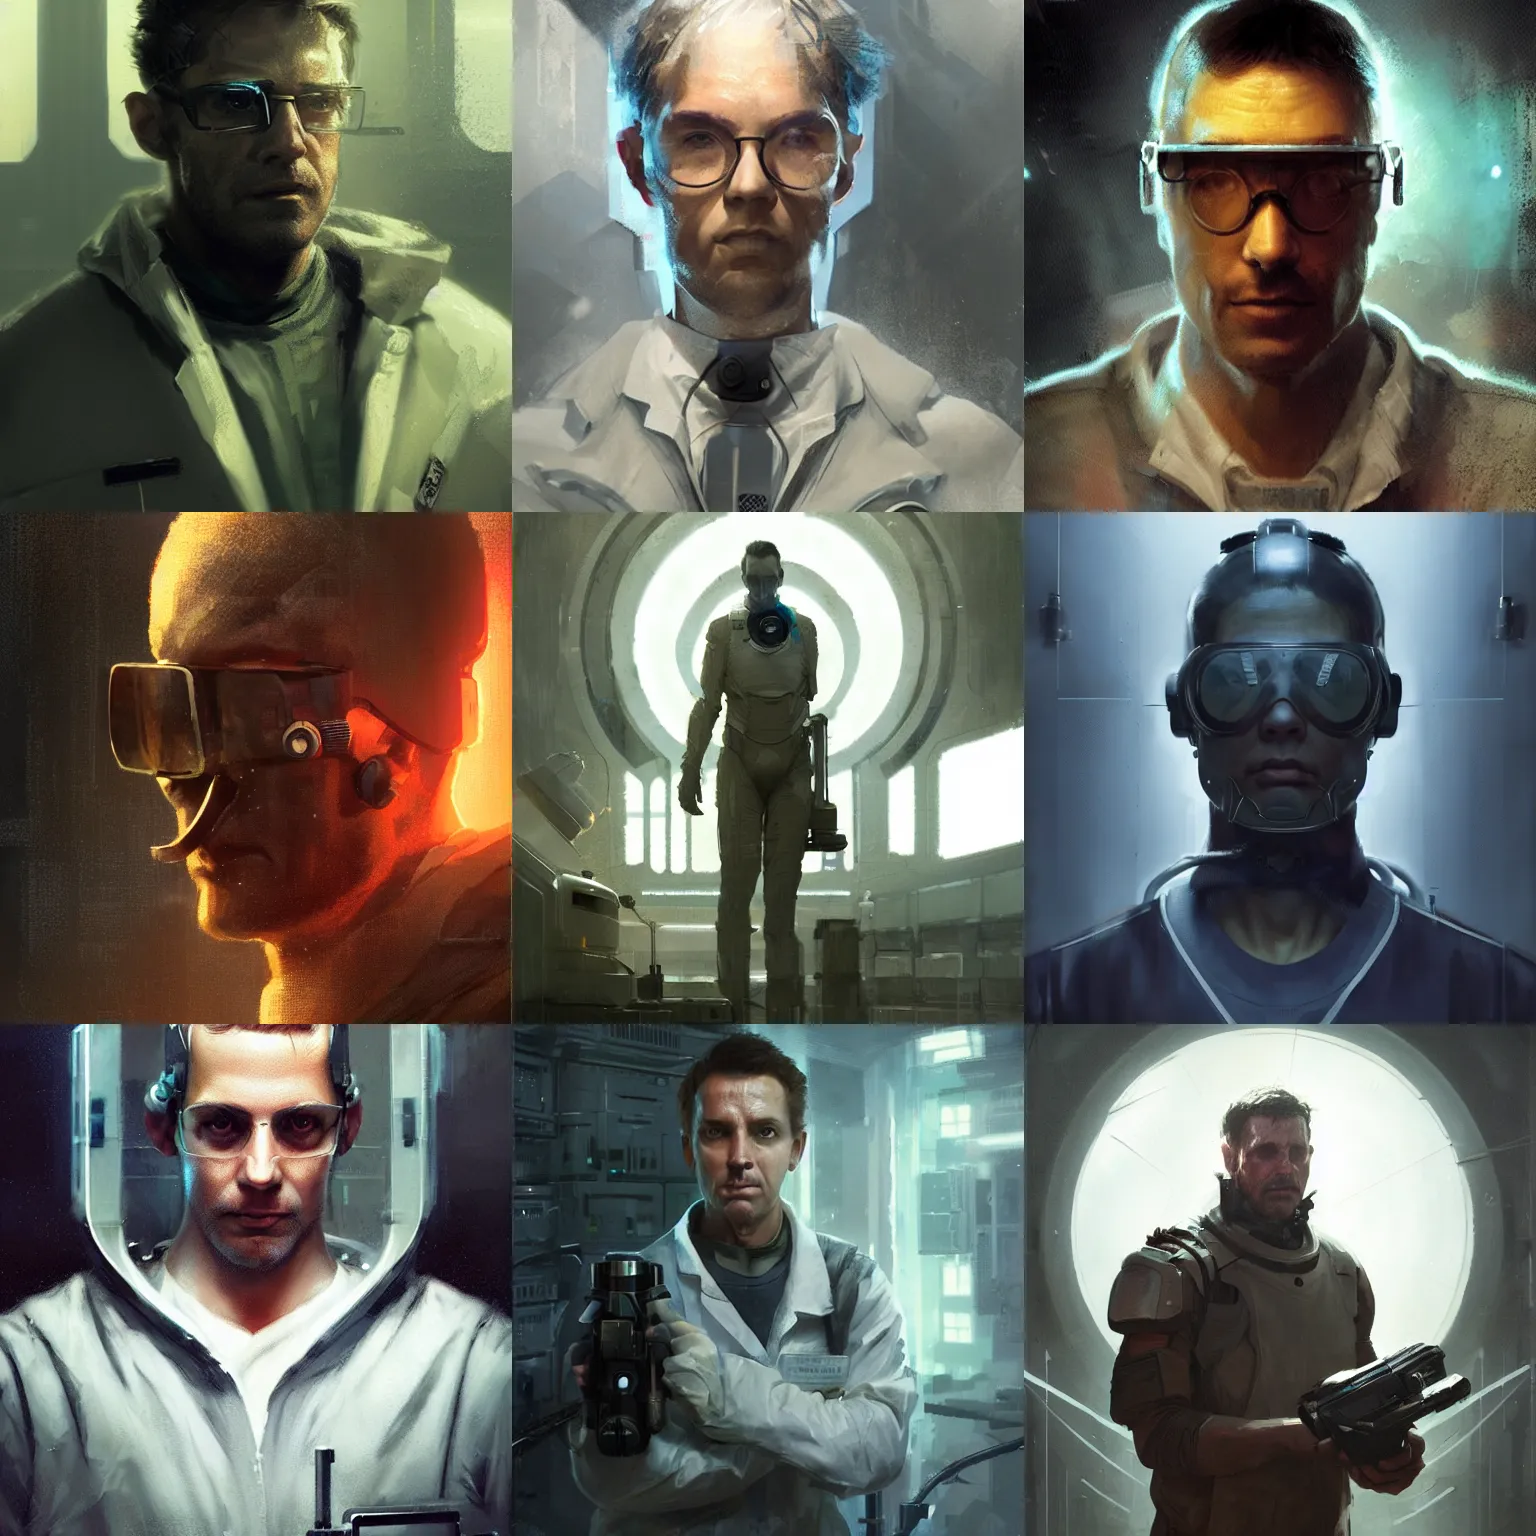 Prompt: a laboratory operator man with dystopian scifi gear, scifi character portrait by greg rutkowski, craig mullins, cinematic lighting, cybernetic enhancement